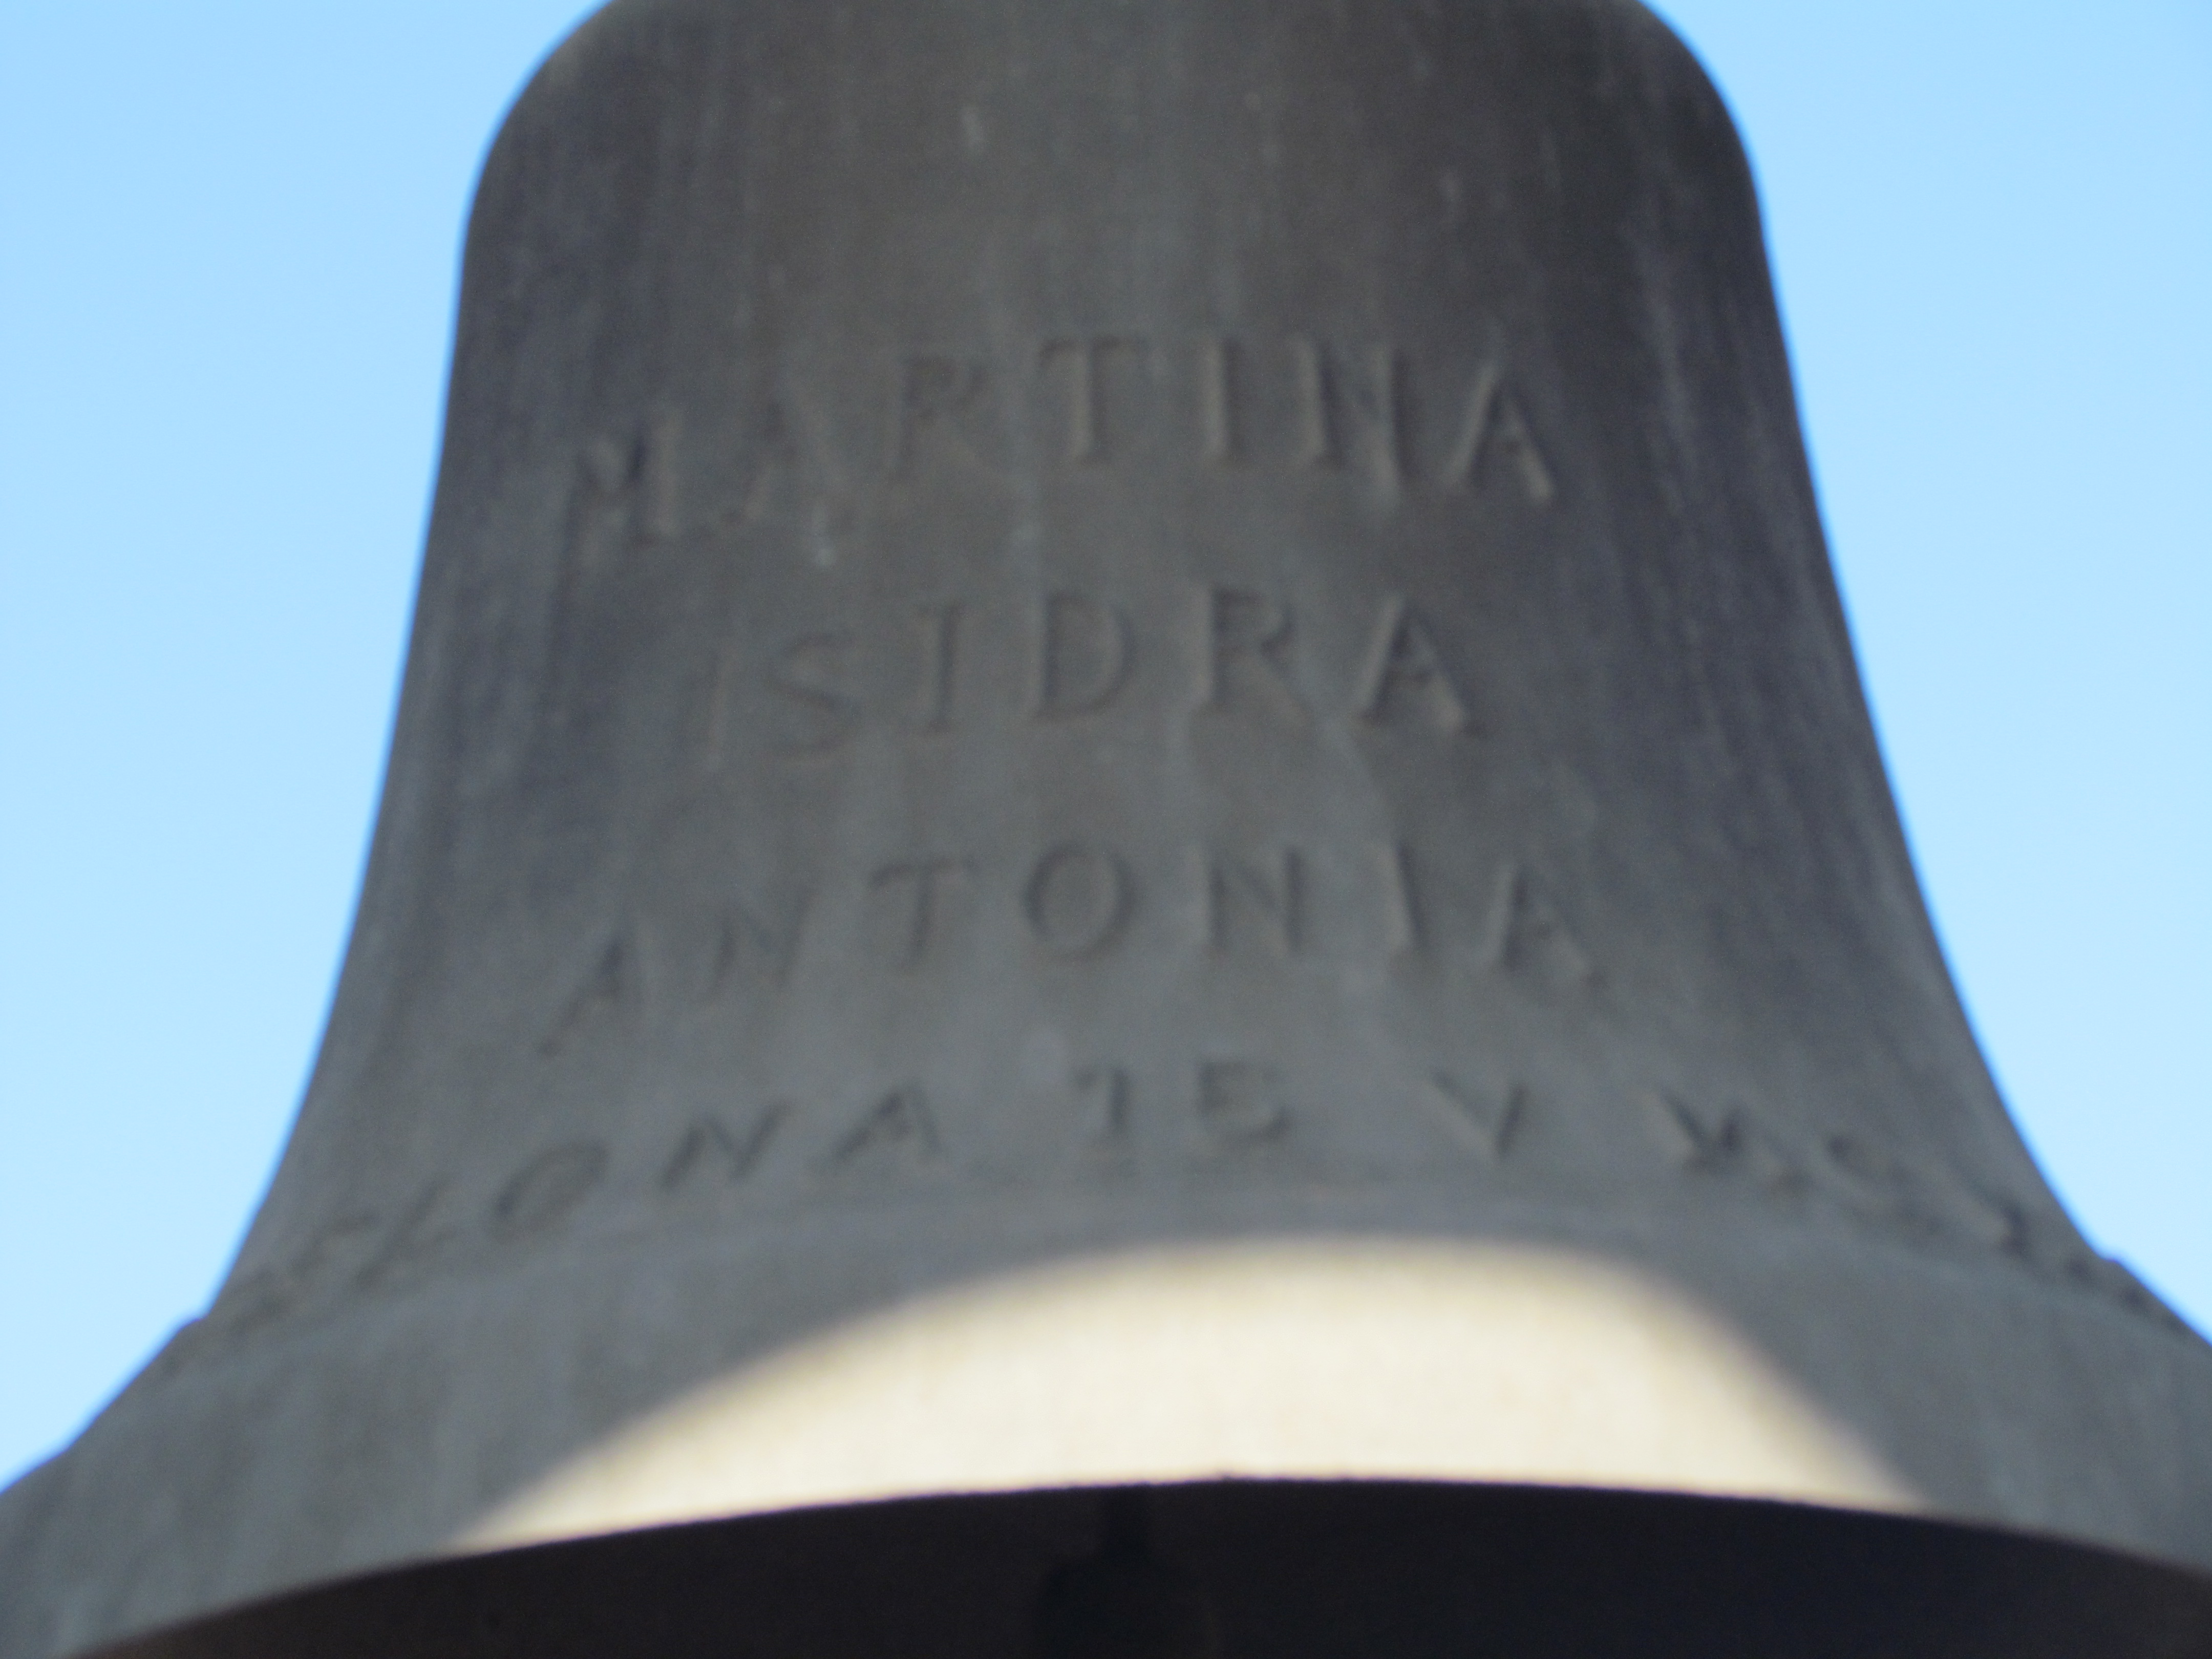 La campana Martina Isidra Antonia